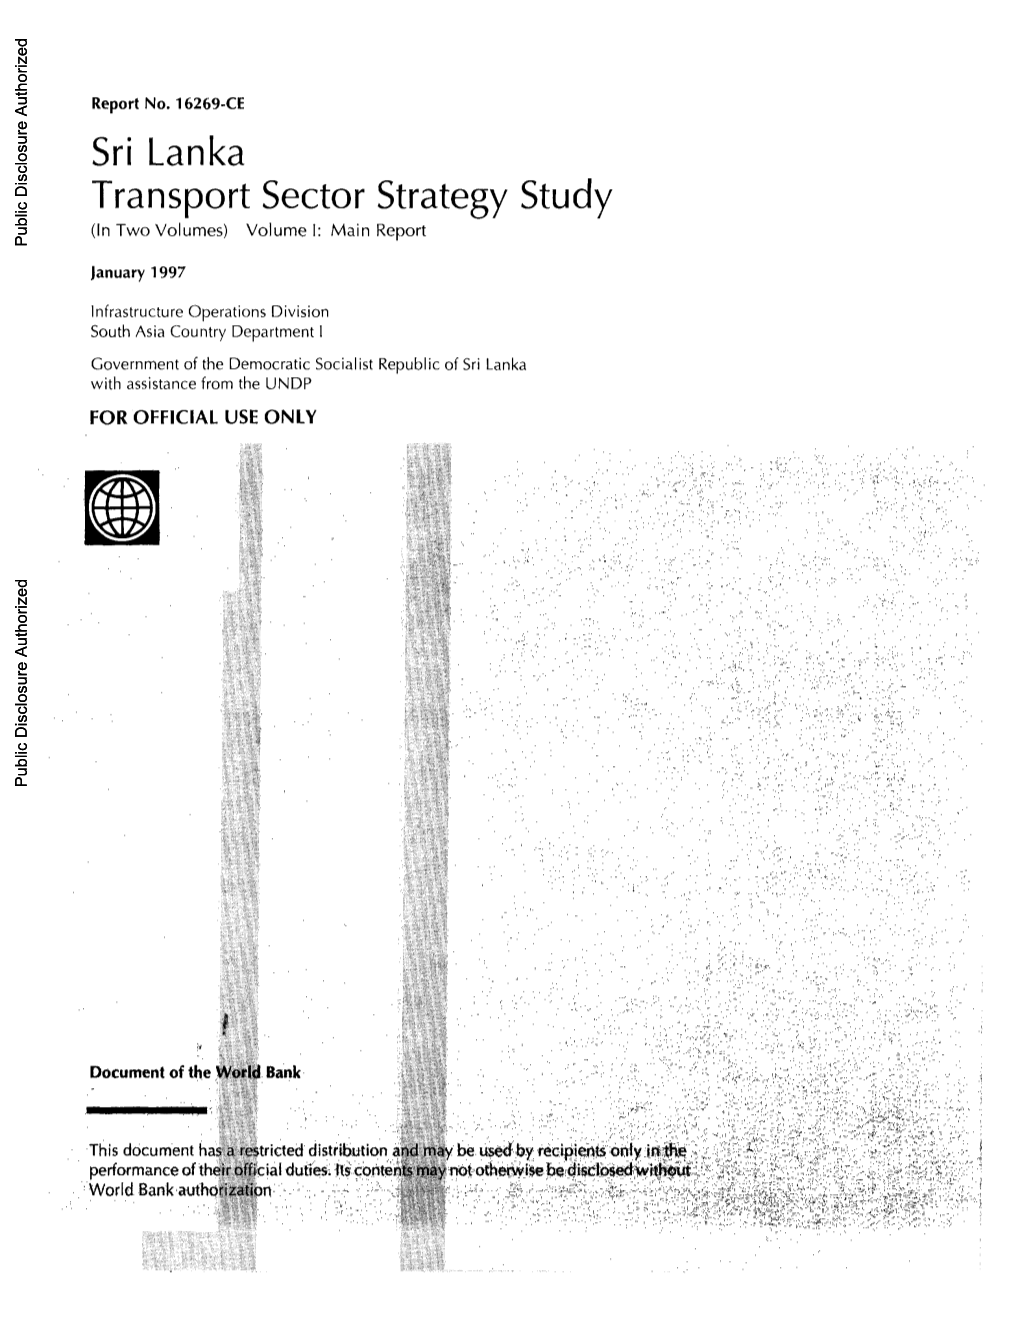 Sri Lanka Transport Sector Strategy Study